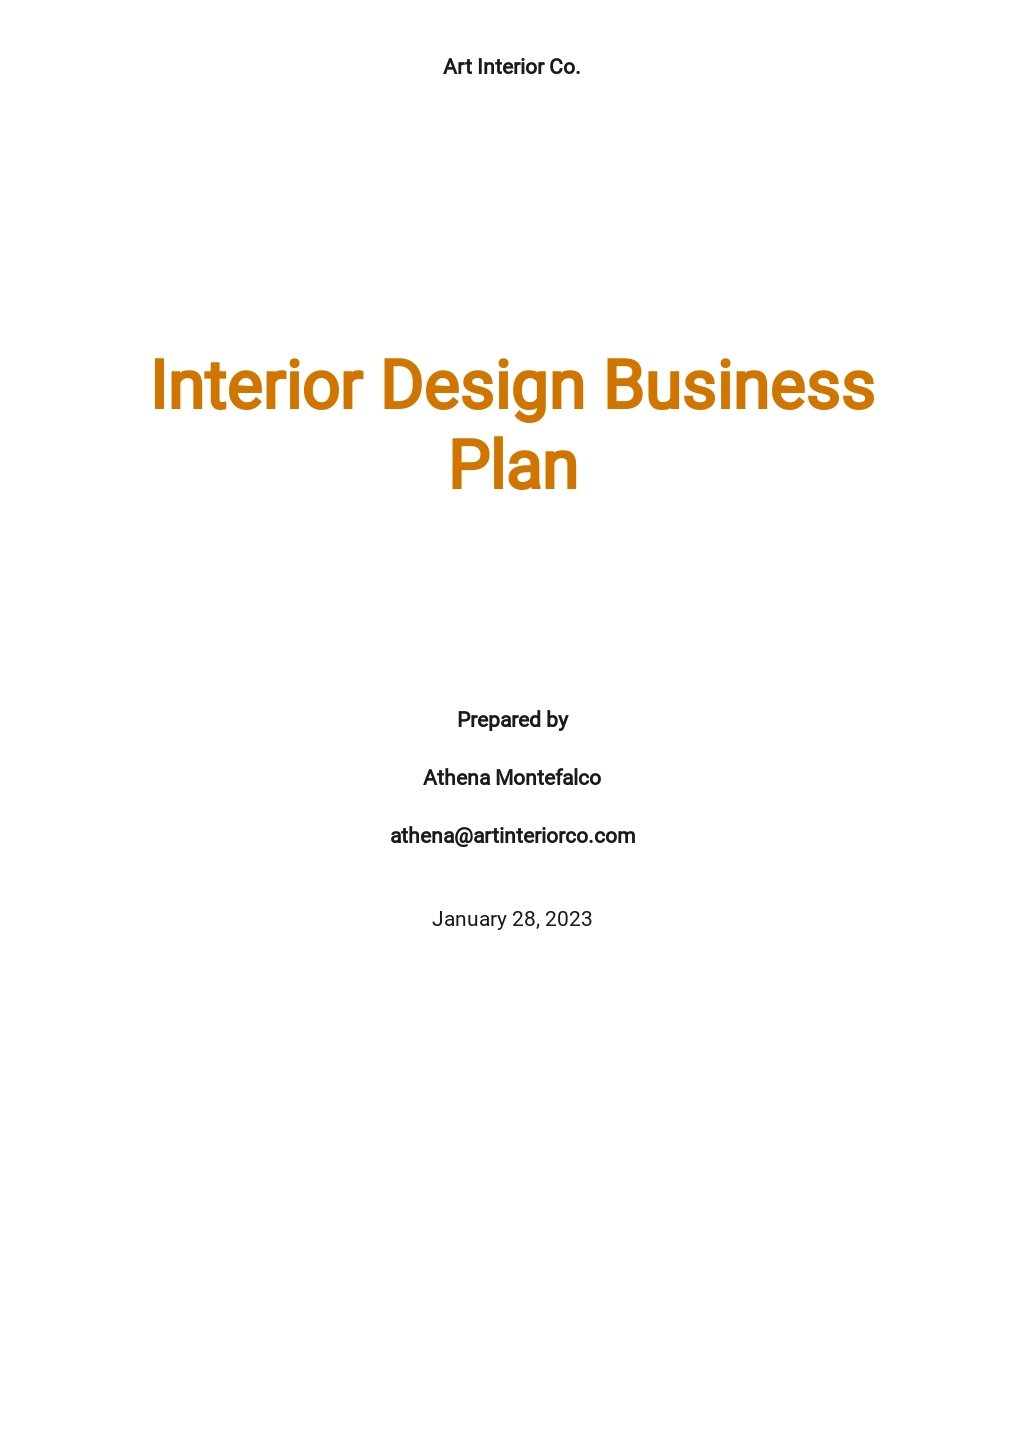 Interior Design Business Plan Template.jpe